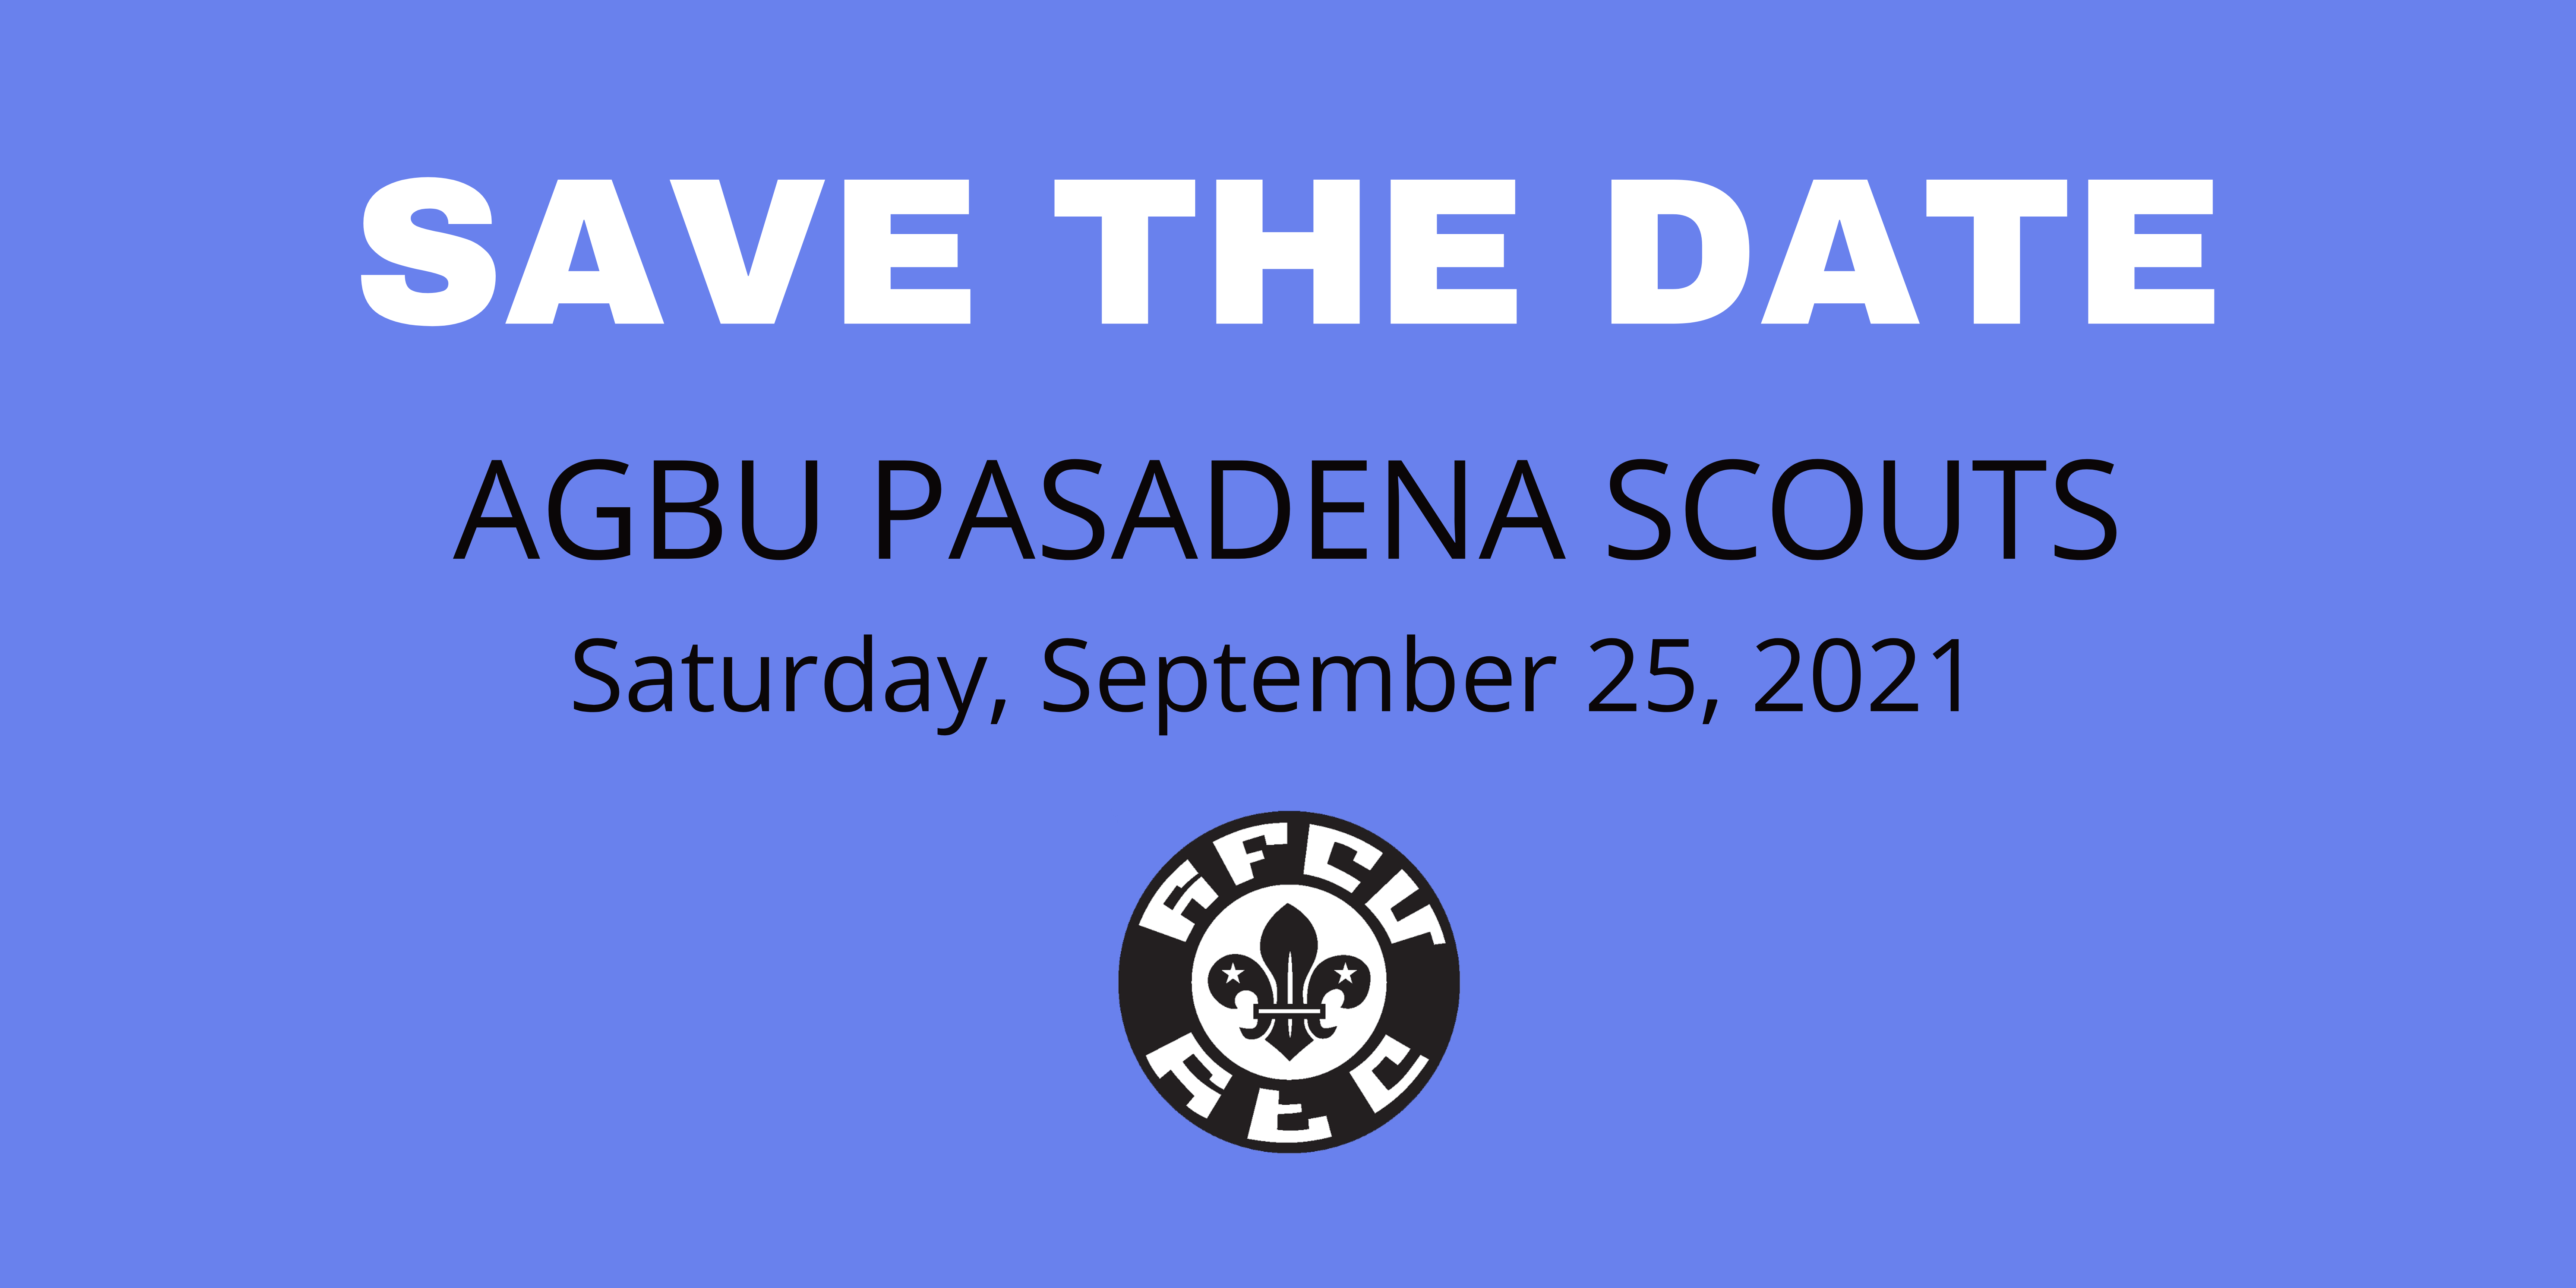 AGBU Pasadena Scouts Return!